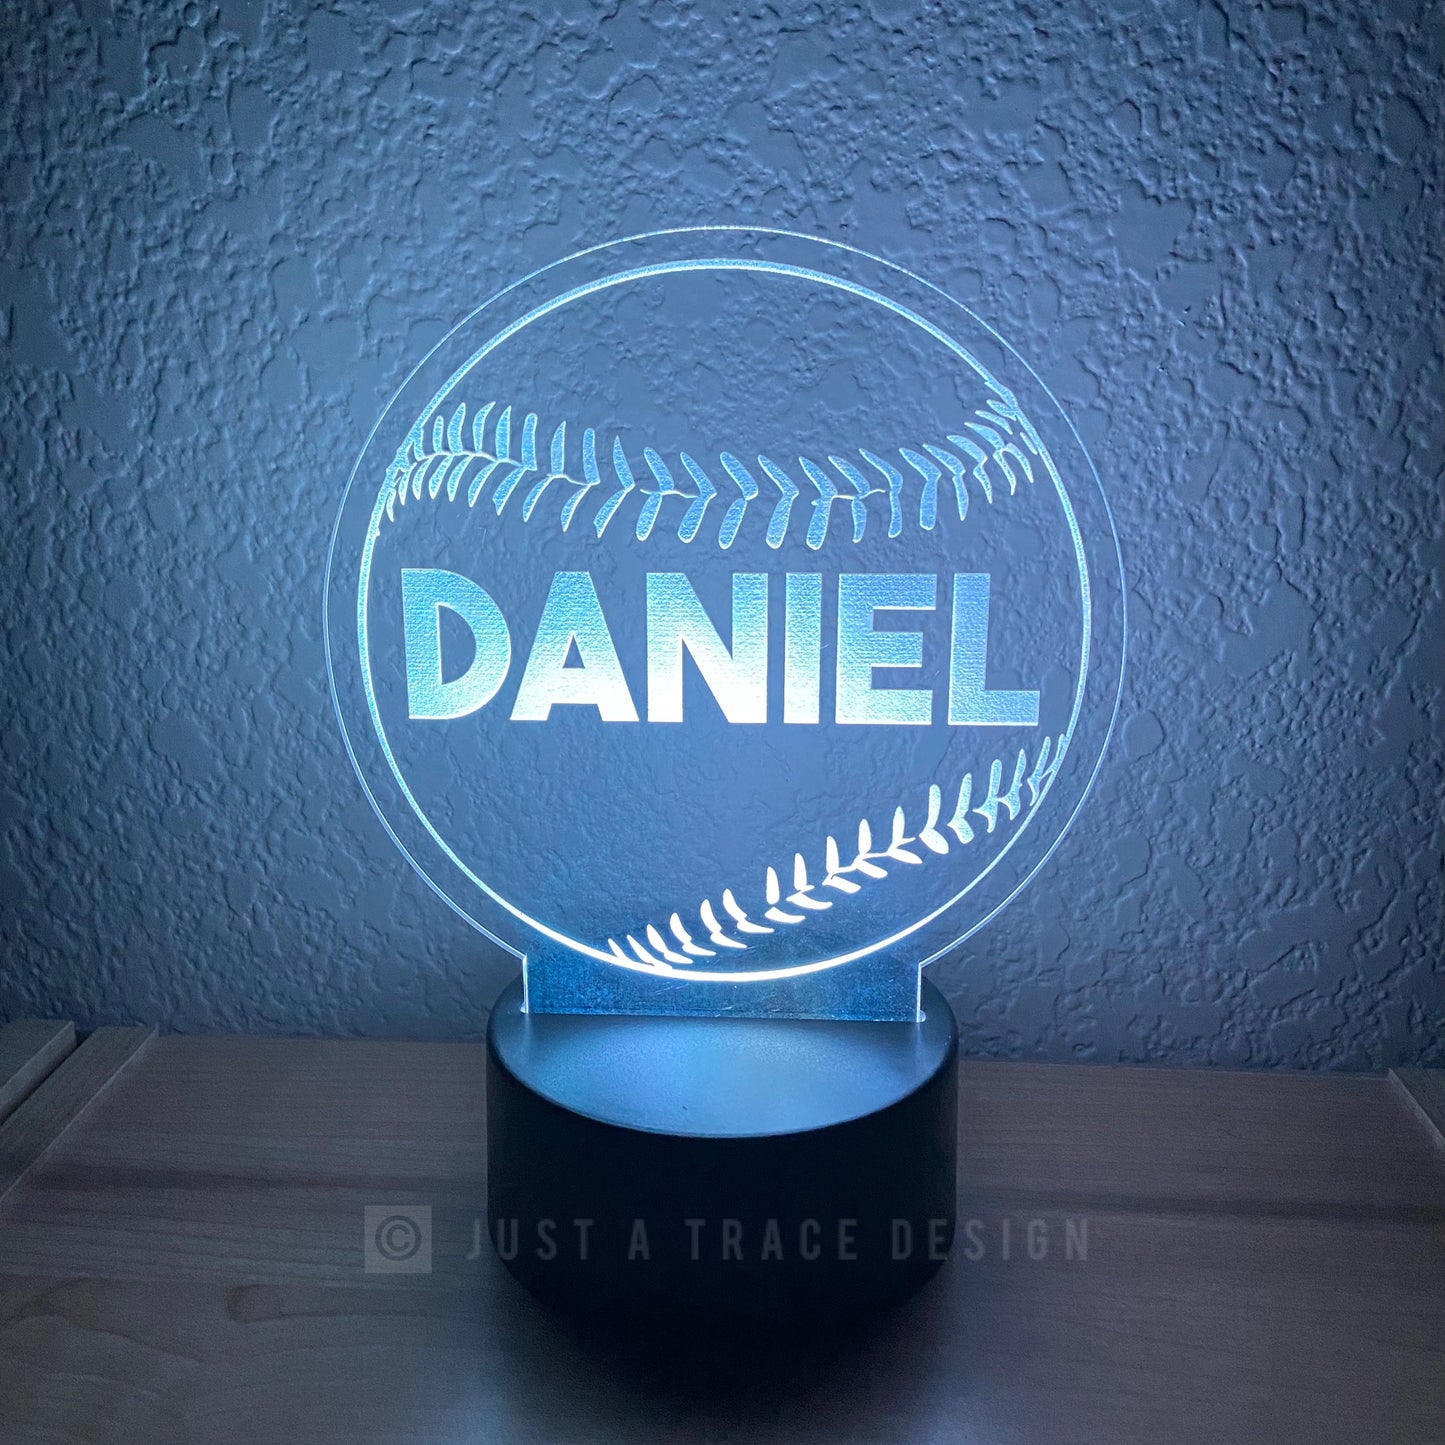 Baseball Personalized Night Light, Kids Night Light, Name Night Light, Sport Nightlight, Acrylic Nightlight, Laser Cut and Engraved